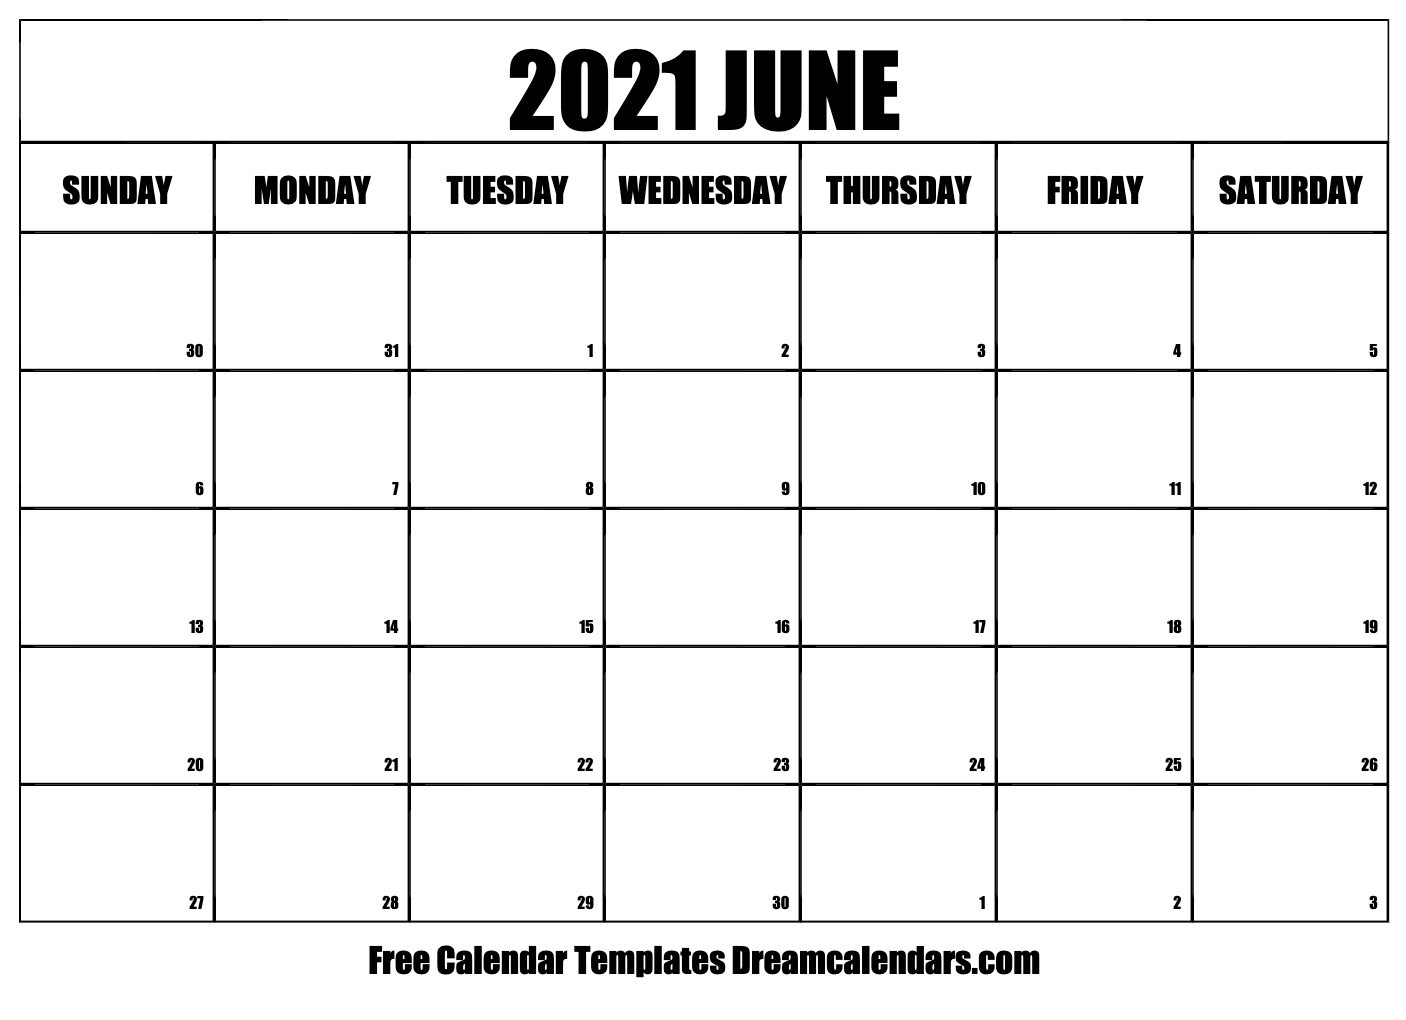 June 2021 Calendar | Free Blank Printable Templates-Calendar I Can Edit June 2021